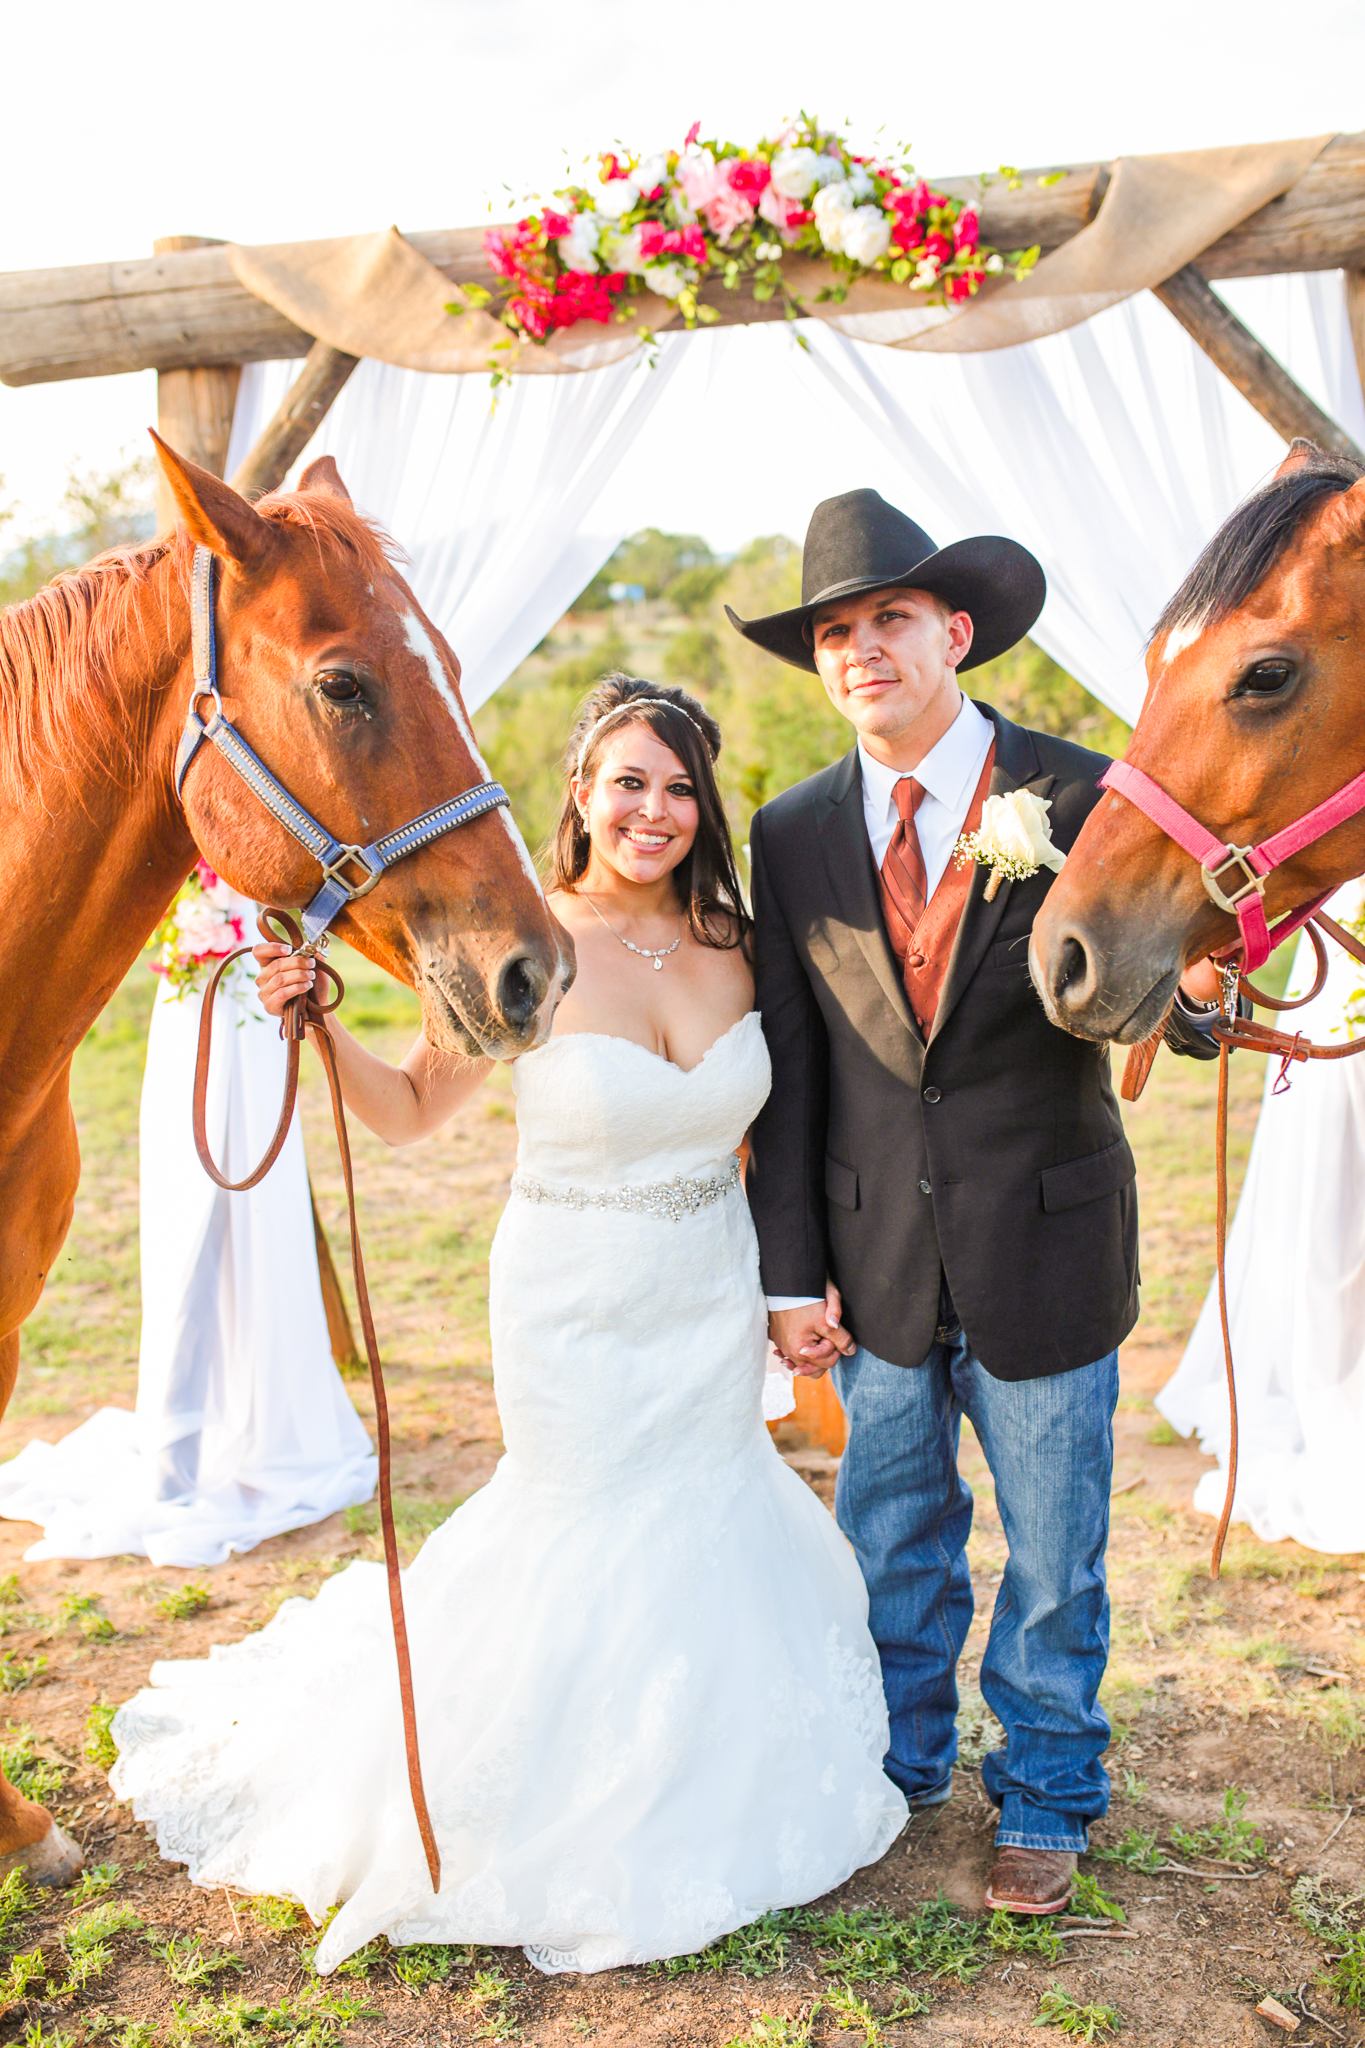 Edgewood New Mexico_Country Wedding Photographer_www.tylerbrooke.com_Kate Kauffman (19 of 35)